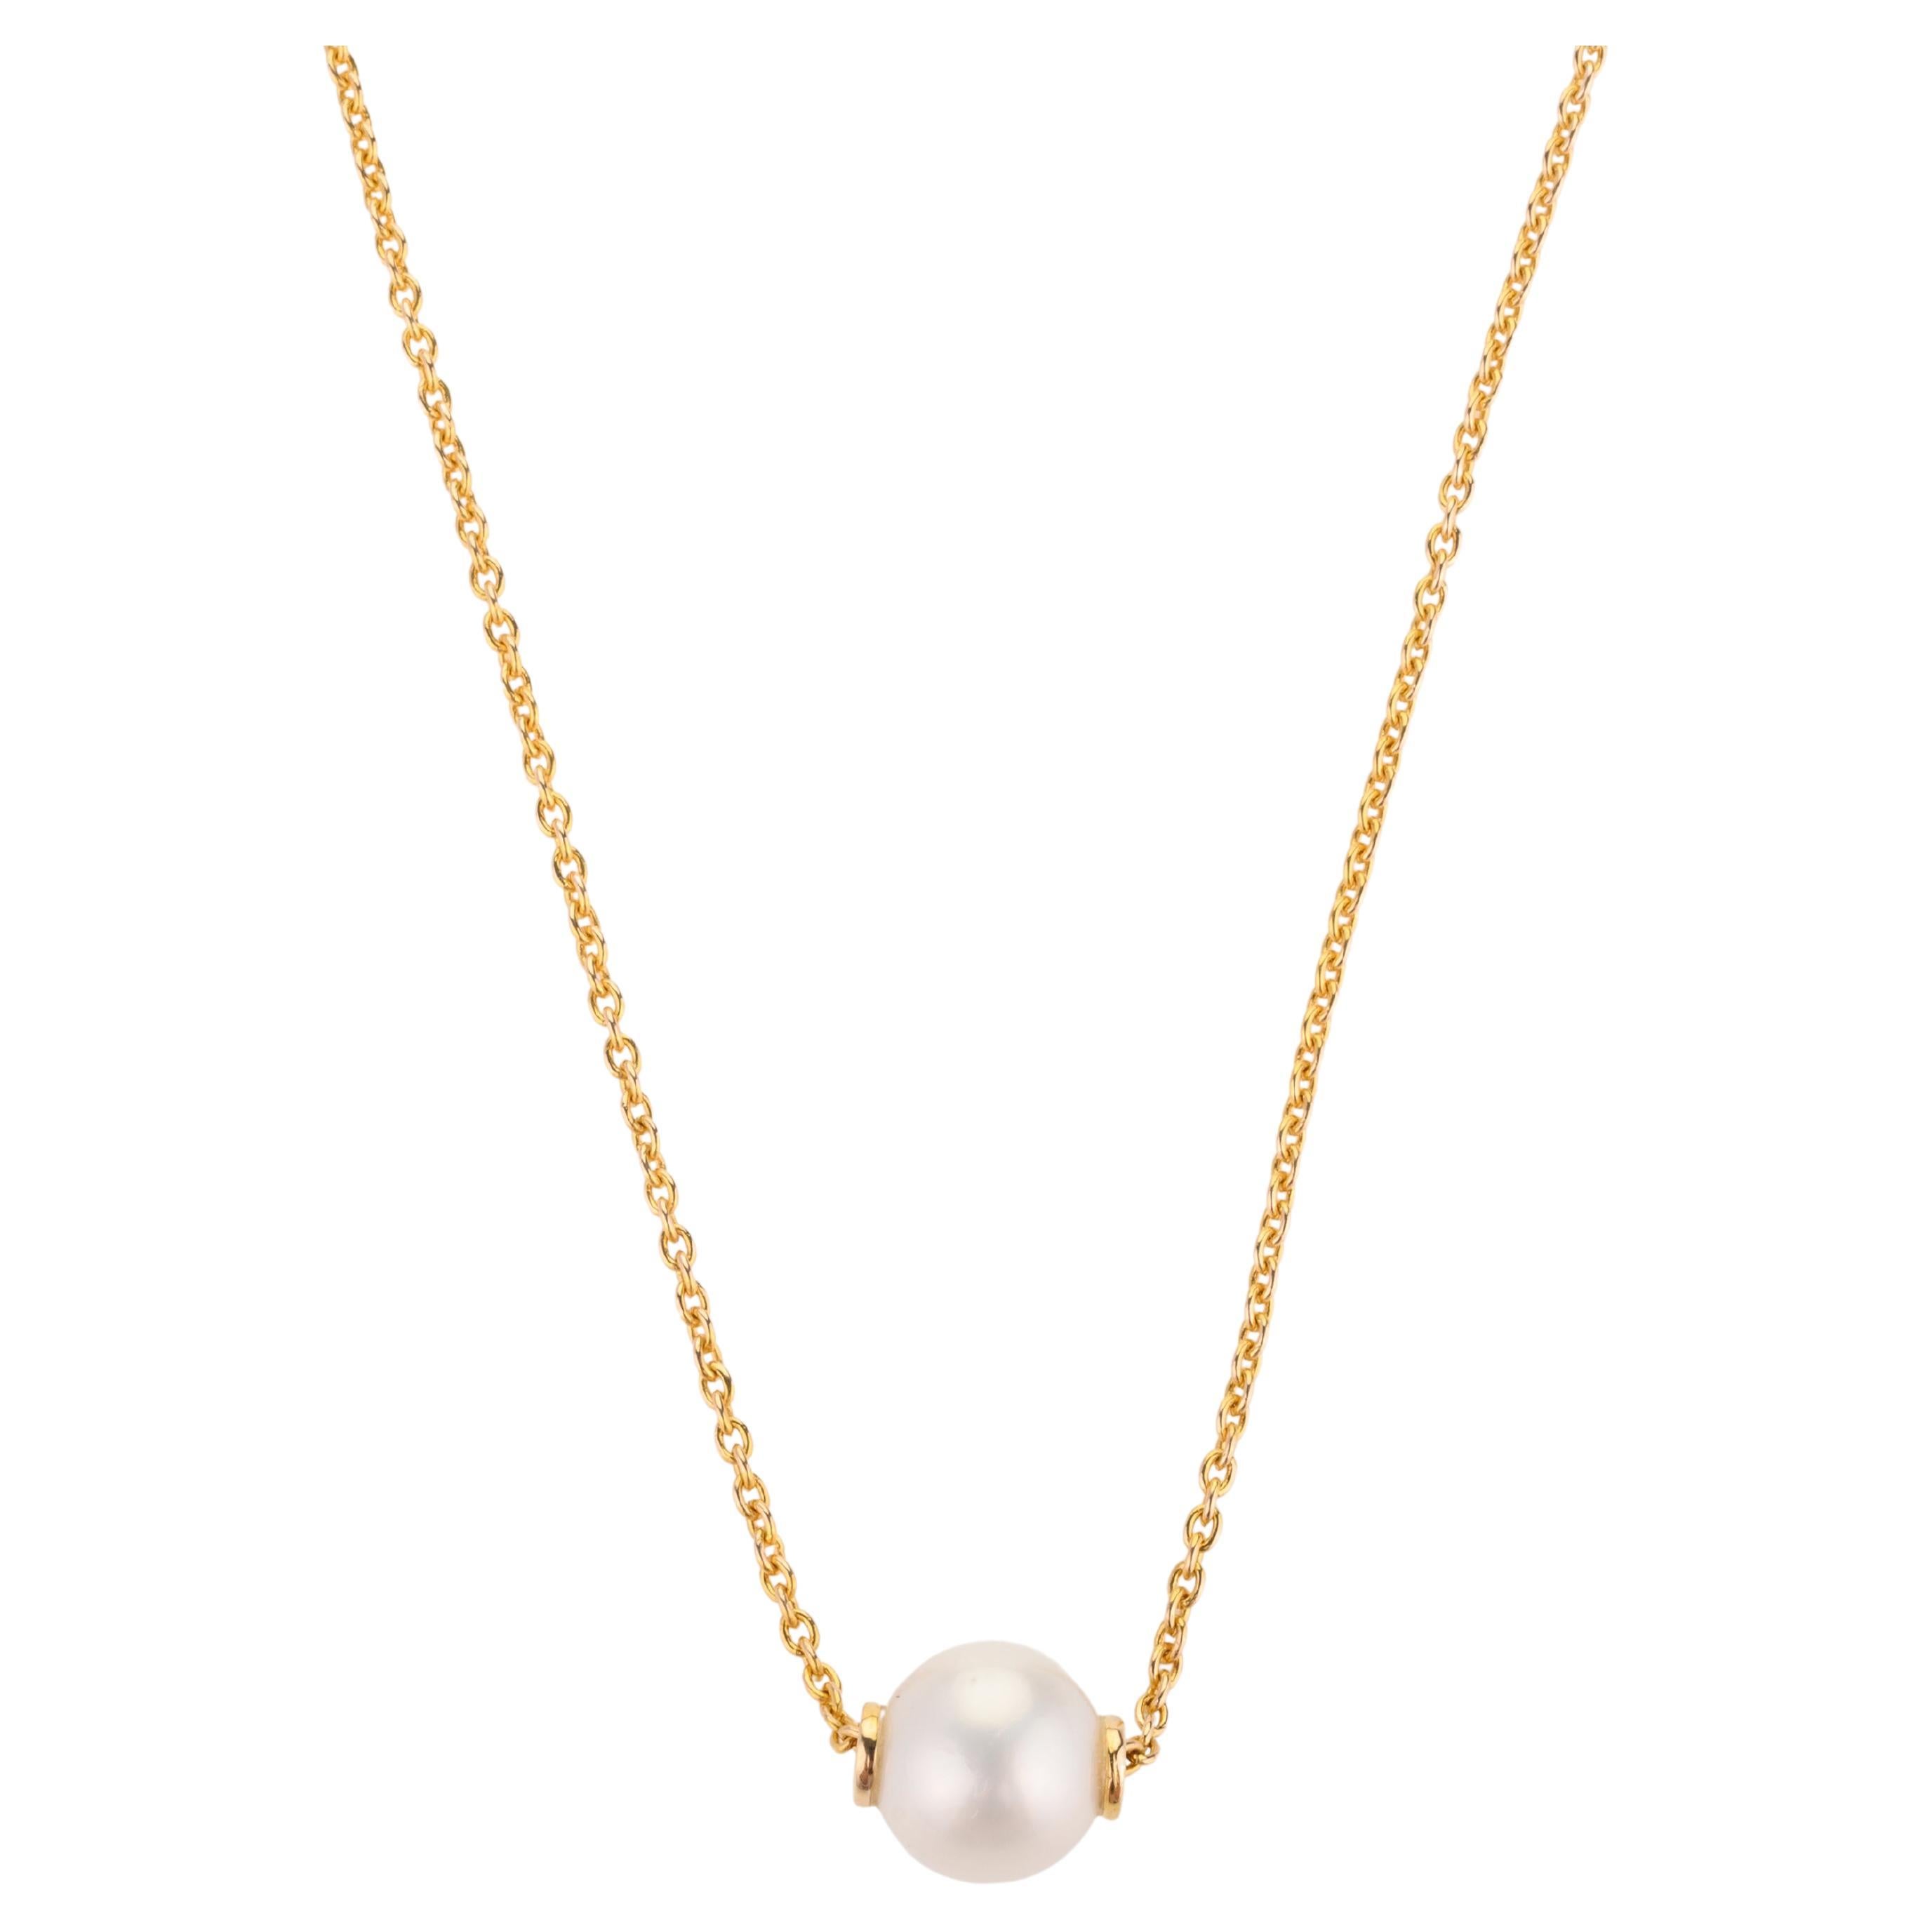 Moderno collar de cadena de perlas de 5 quilates para uso diario en oro amarillo macizo de 18 quilates